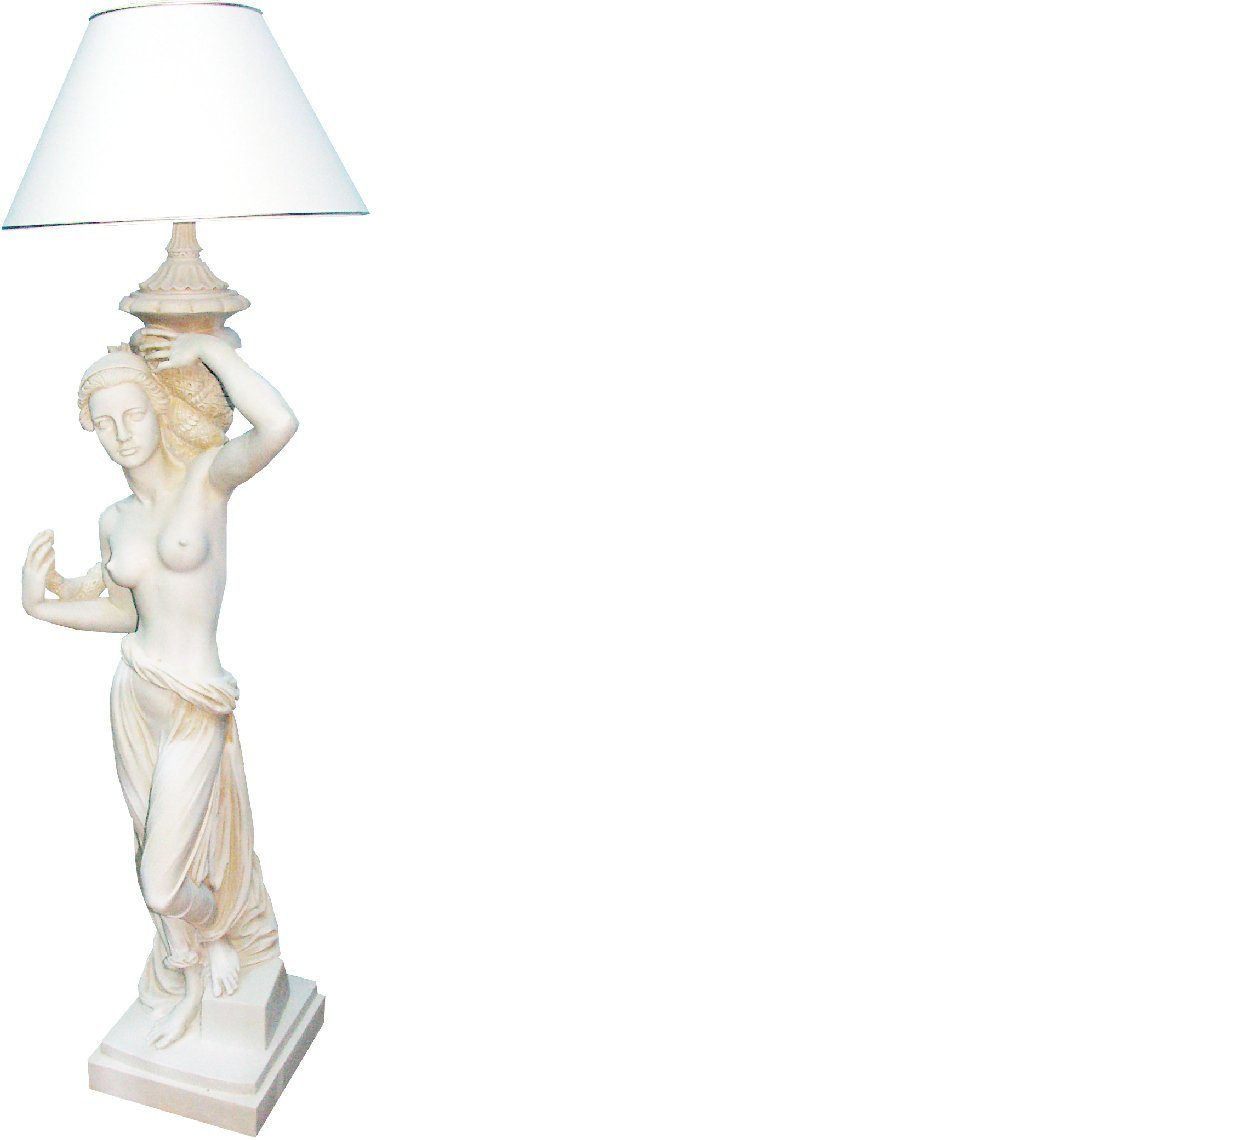 JVmoebel Skulptur Figur Lebensgroß mit Beleuchtung Stehlampe Standleuchte Lampe Lampen